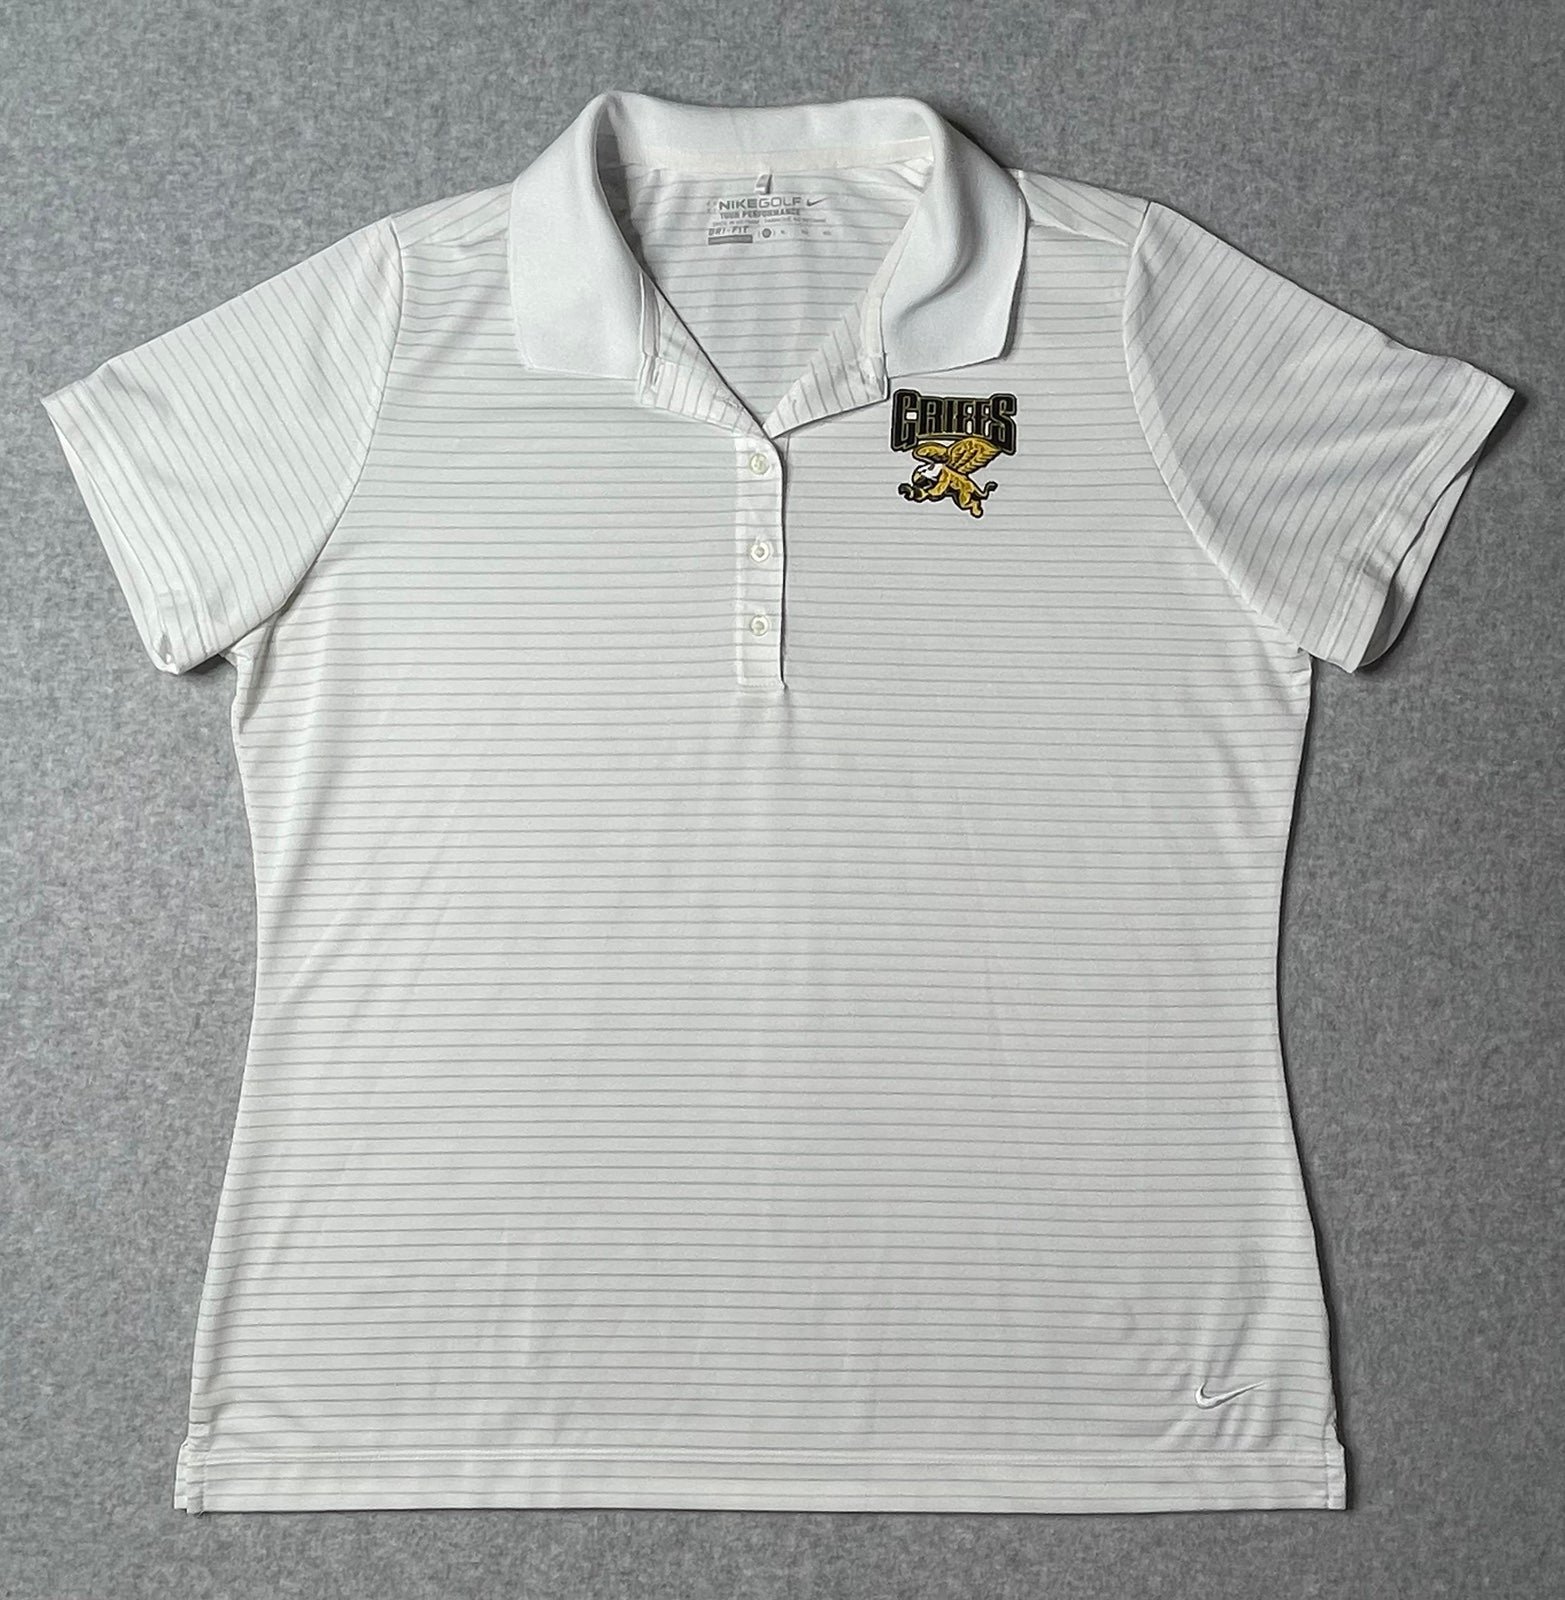 Buy Nike Golf Shirt Womens Canisius High School Polo l2